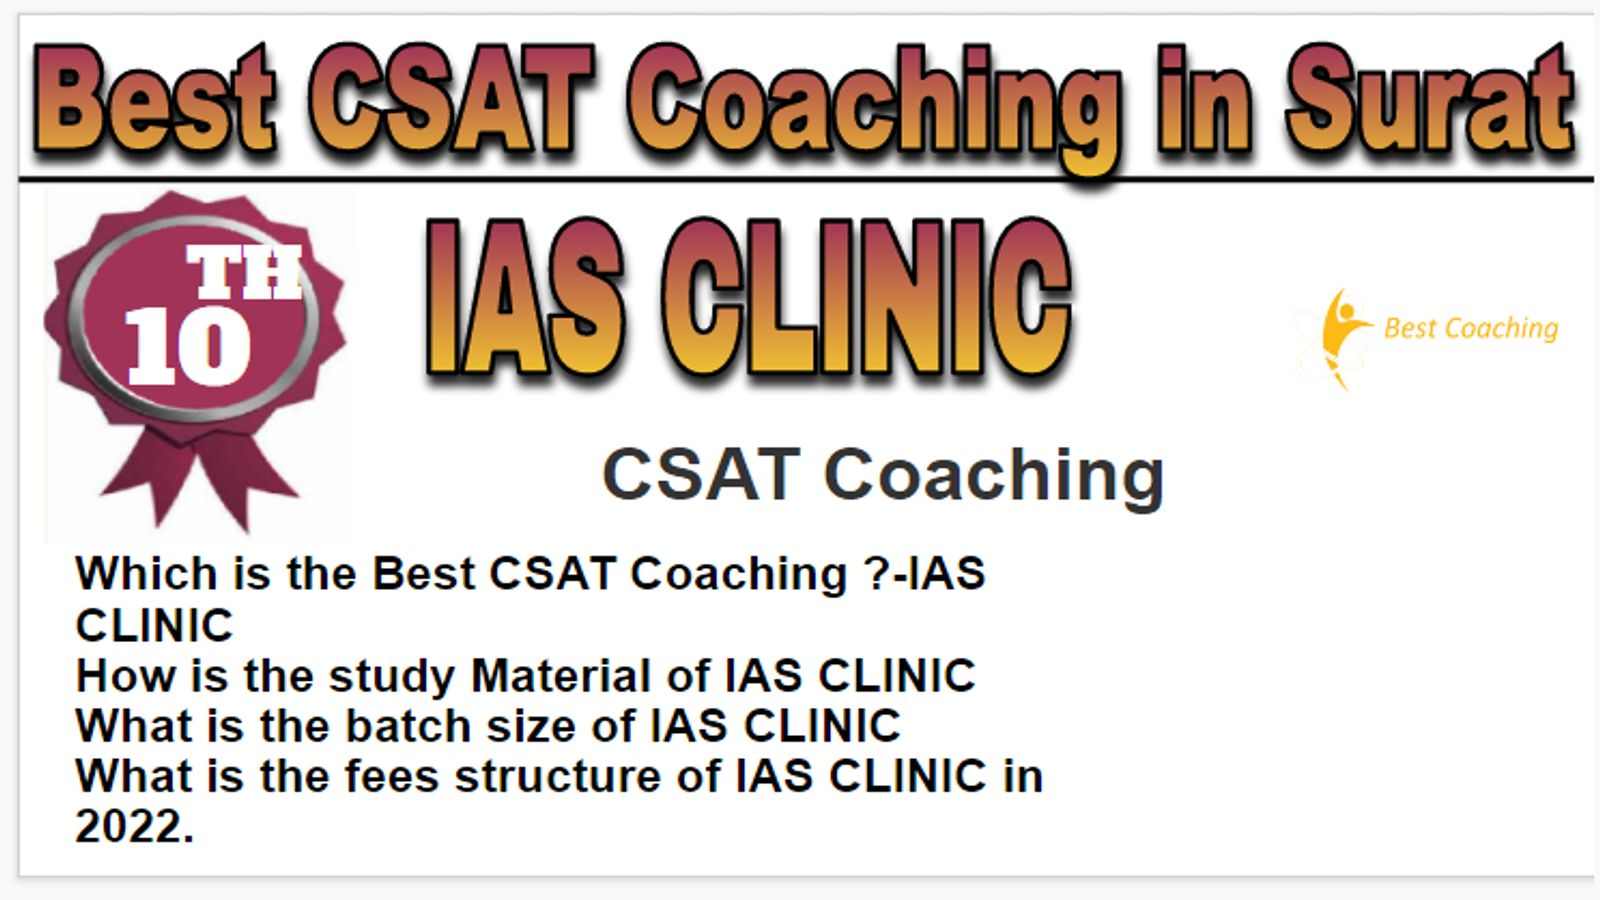 Rank 10 Best CSAT Coaching in Surat